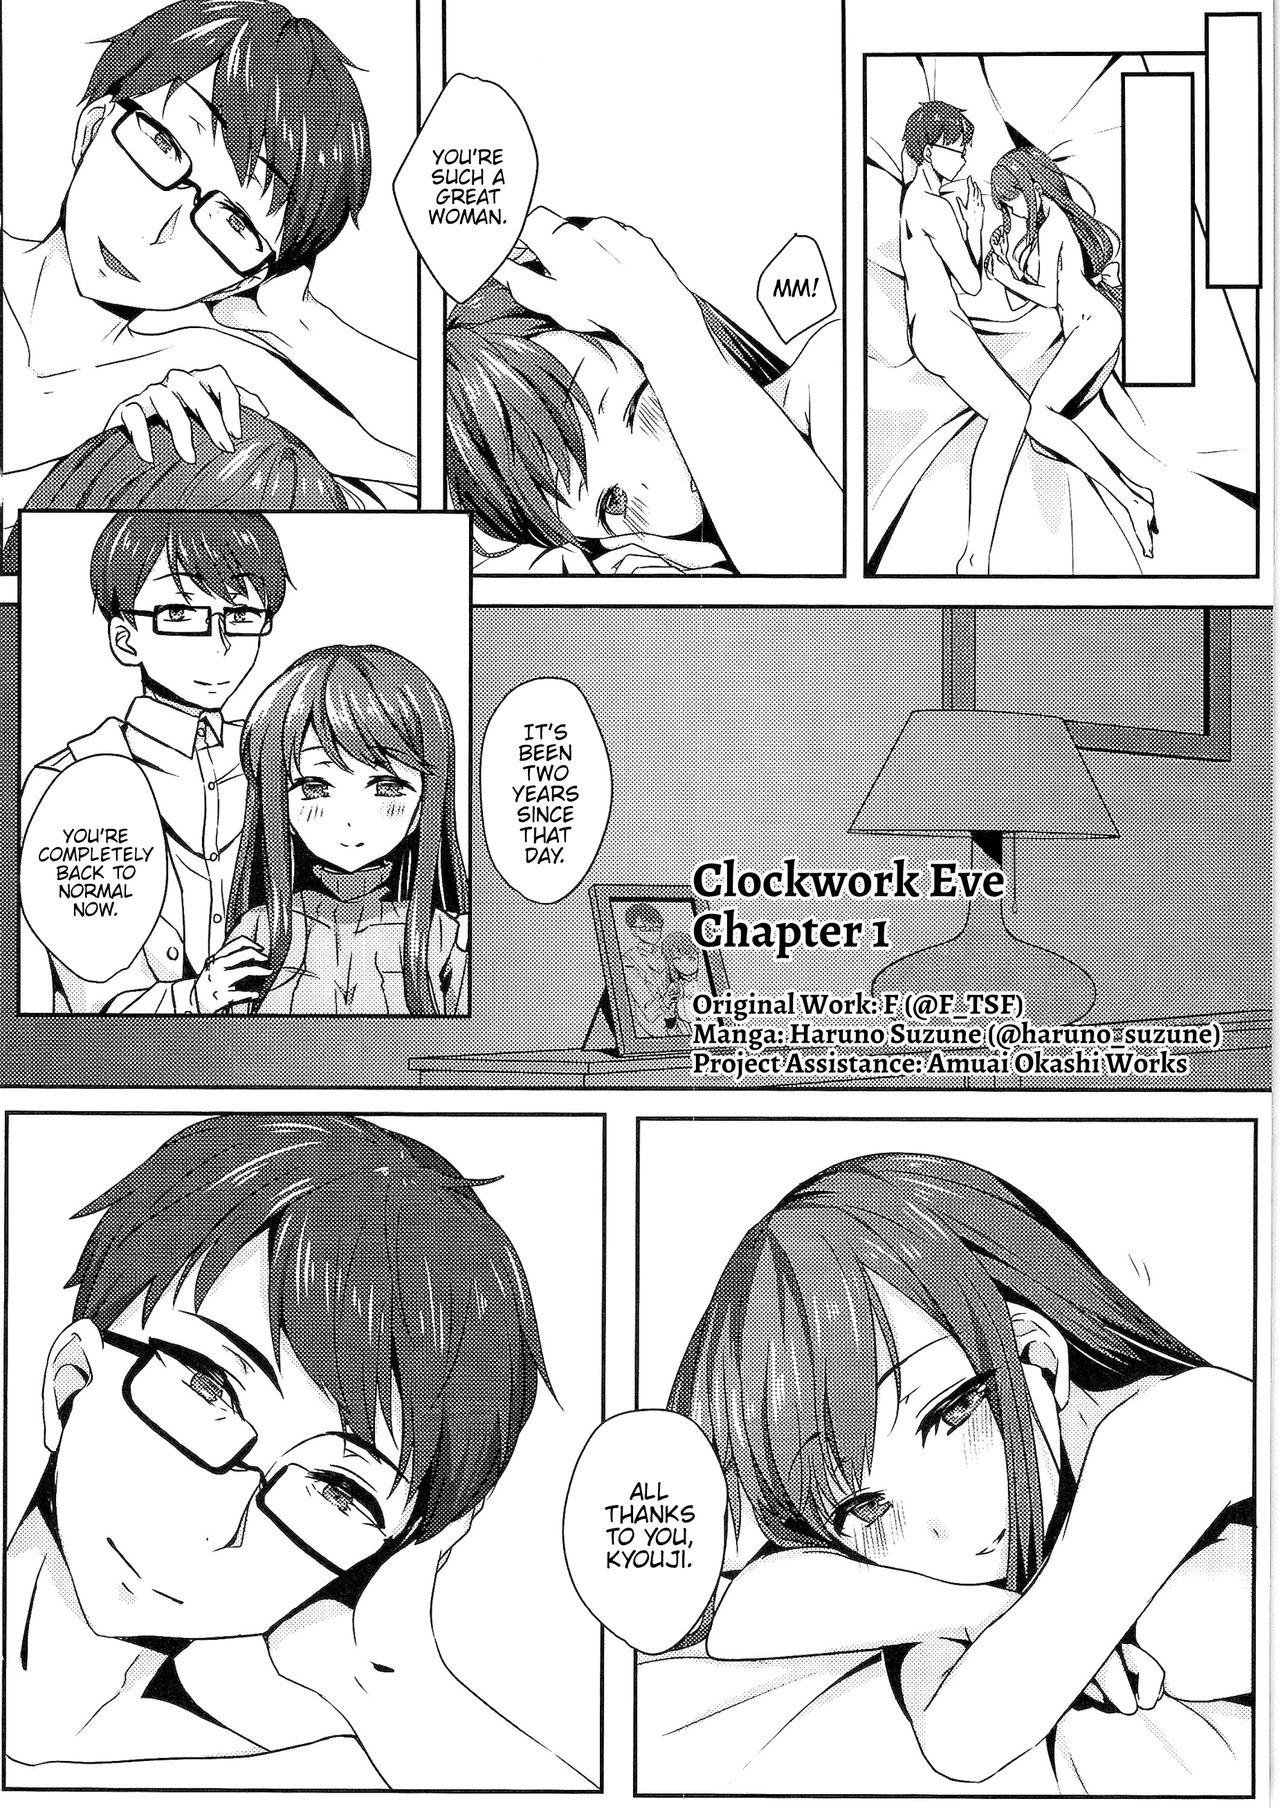 Clockwork Eve Chapter 1 | Kikaishikake no Eve Ch. 1 1